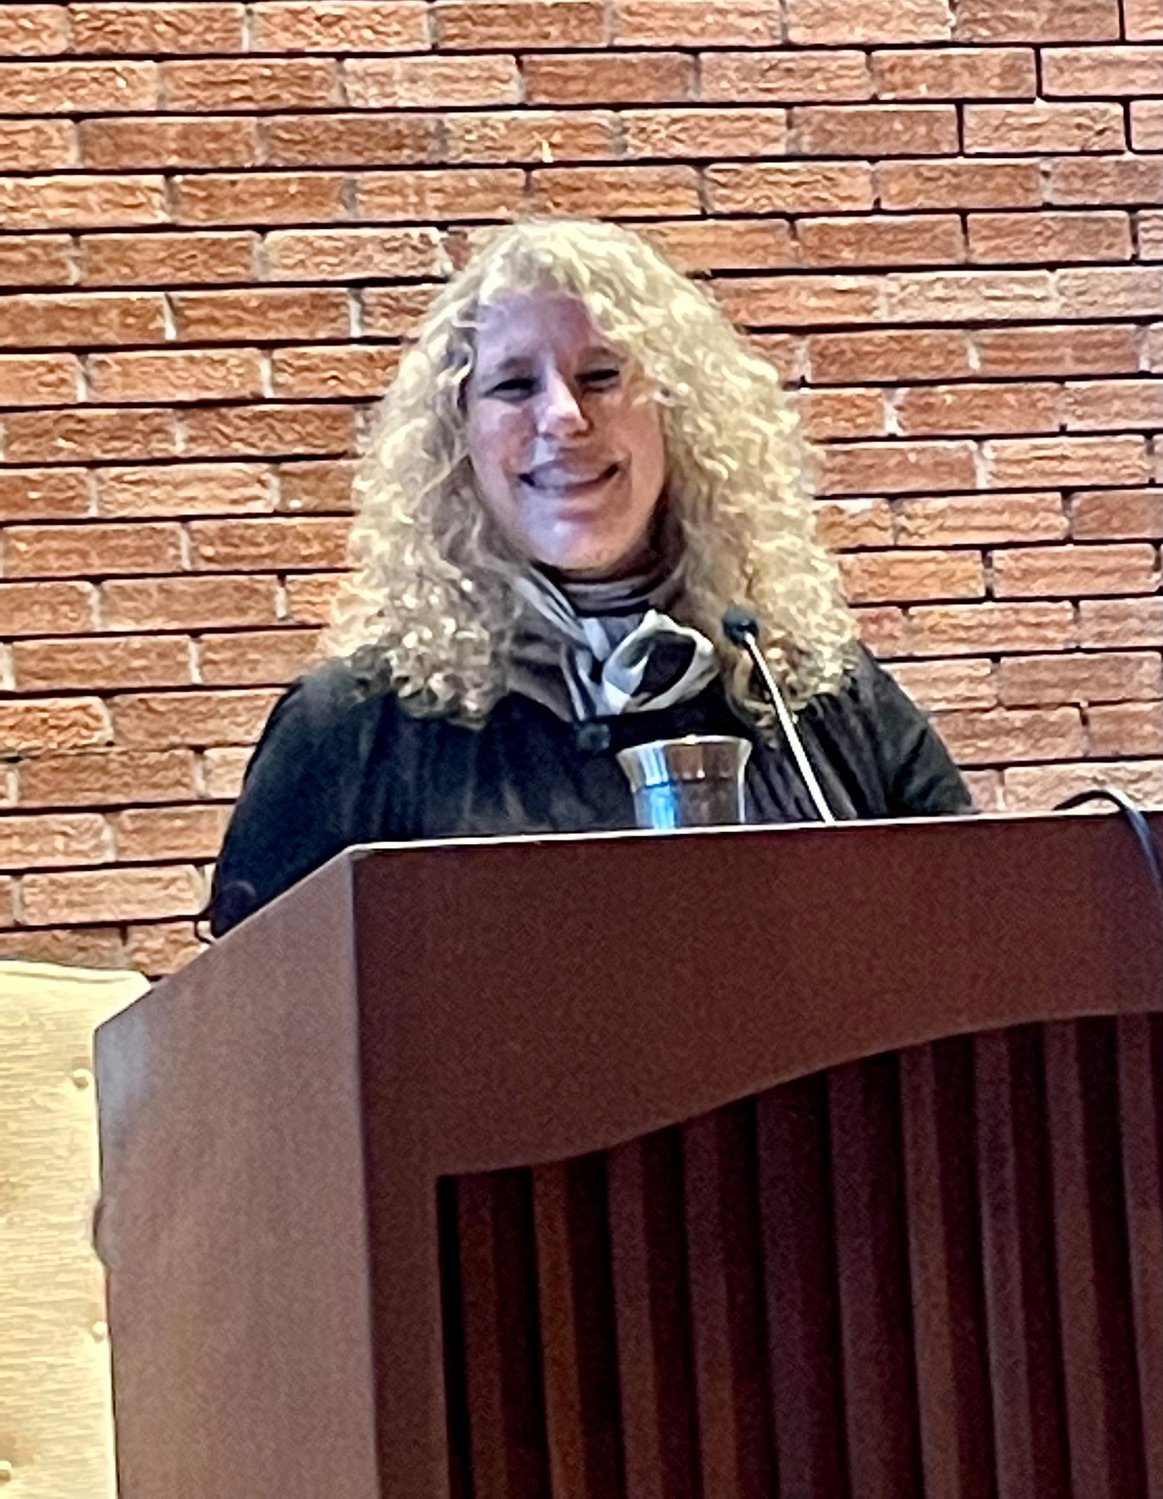 Cantor Lisa Kantor addressing those in attendance commemorating Yom Hashoah last Thursday.